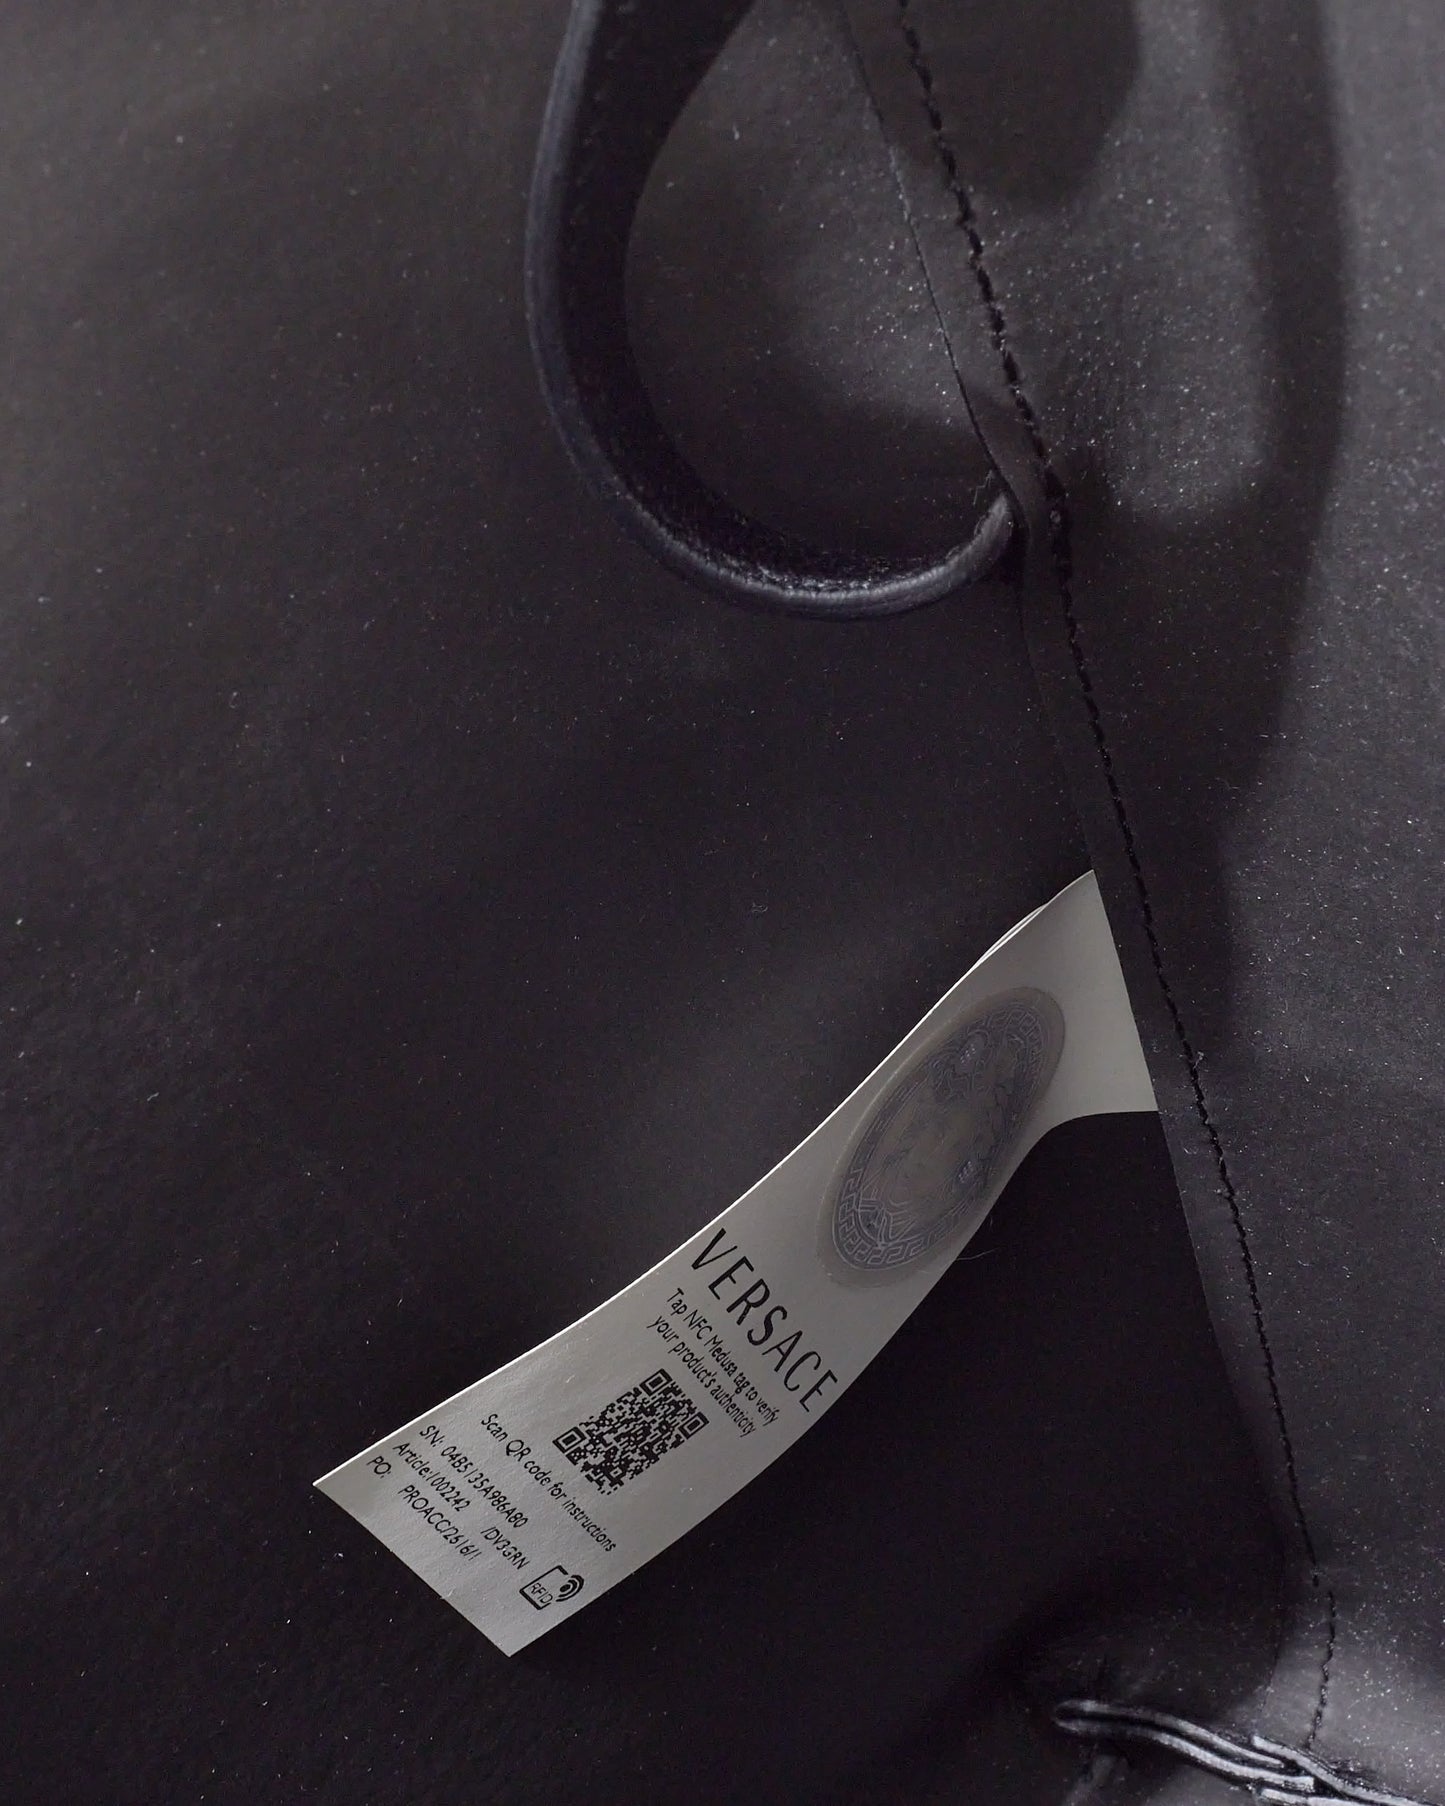 Versace Black Leather Virtus Shopping Tote